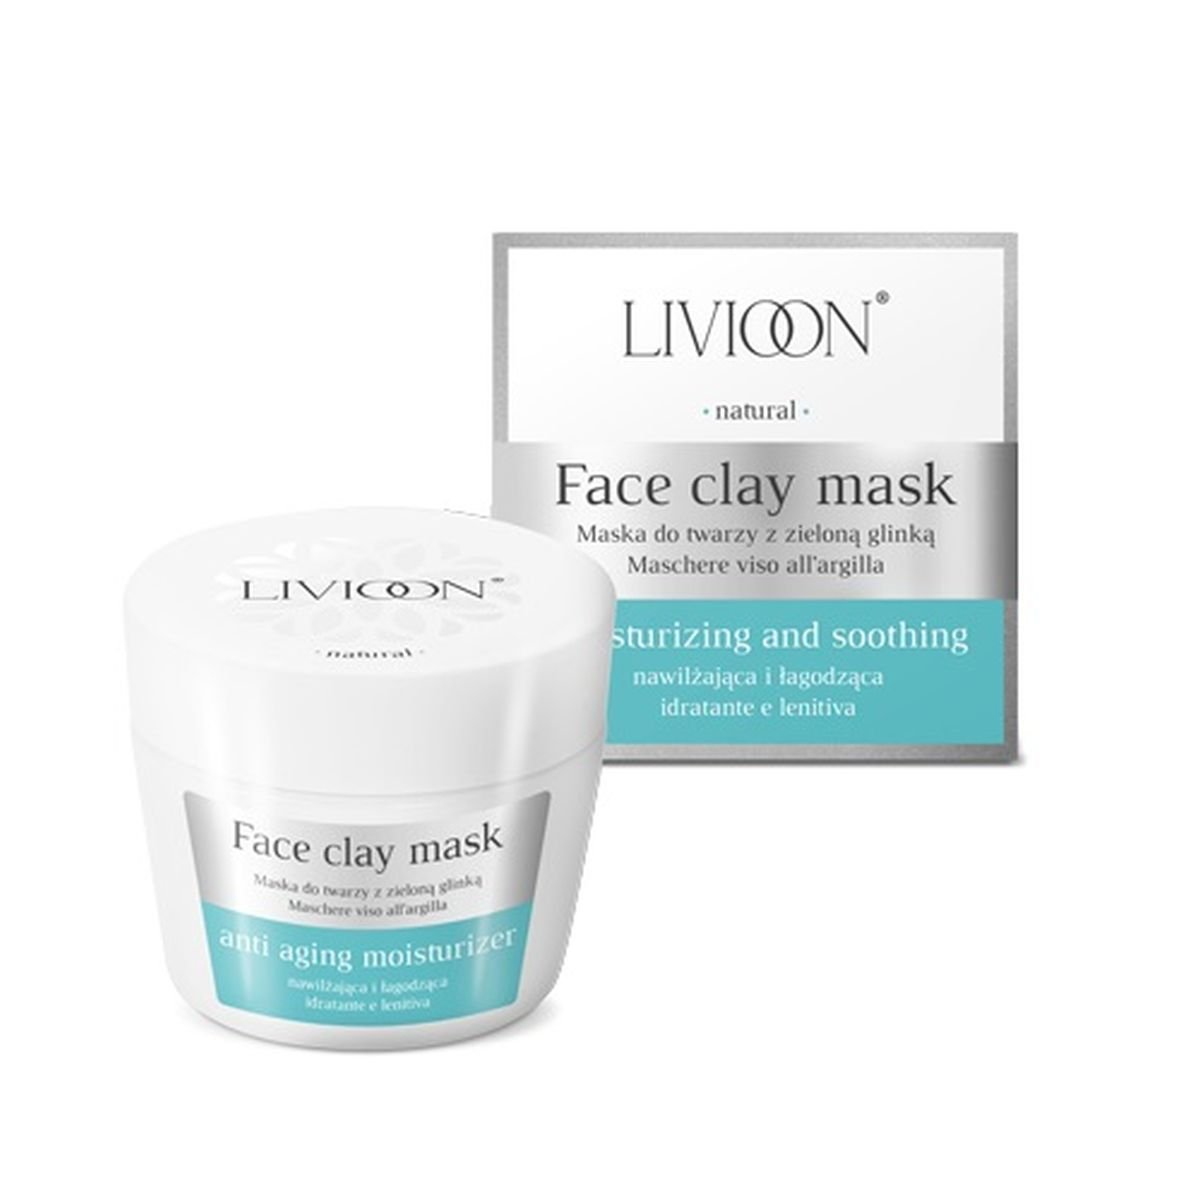 Livioon Livioon Natural Face Mask maska do twarzy z zieloną glinką 50ml